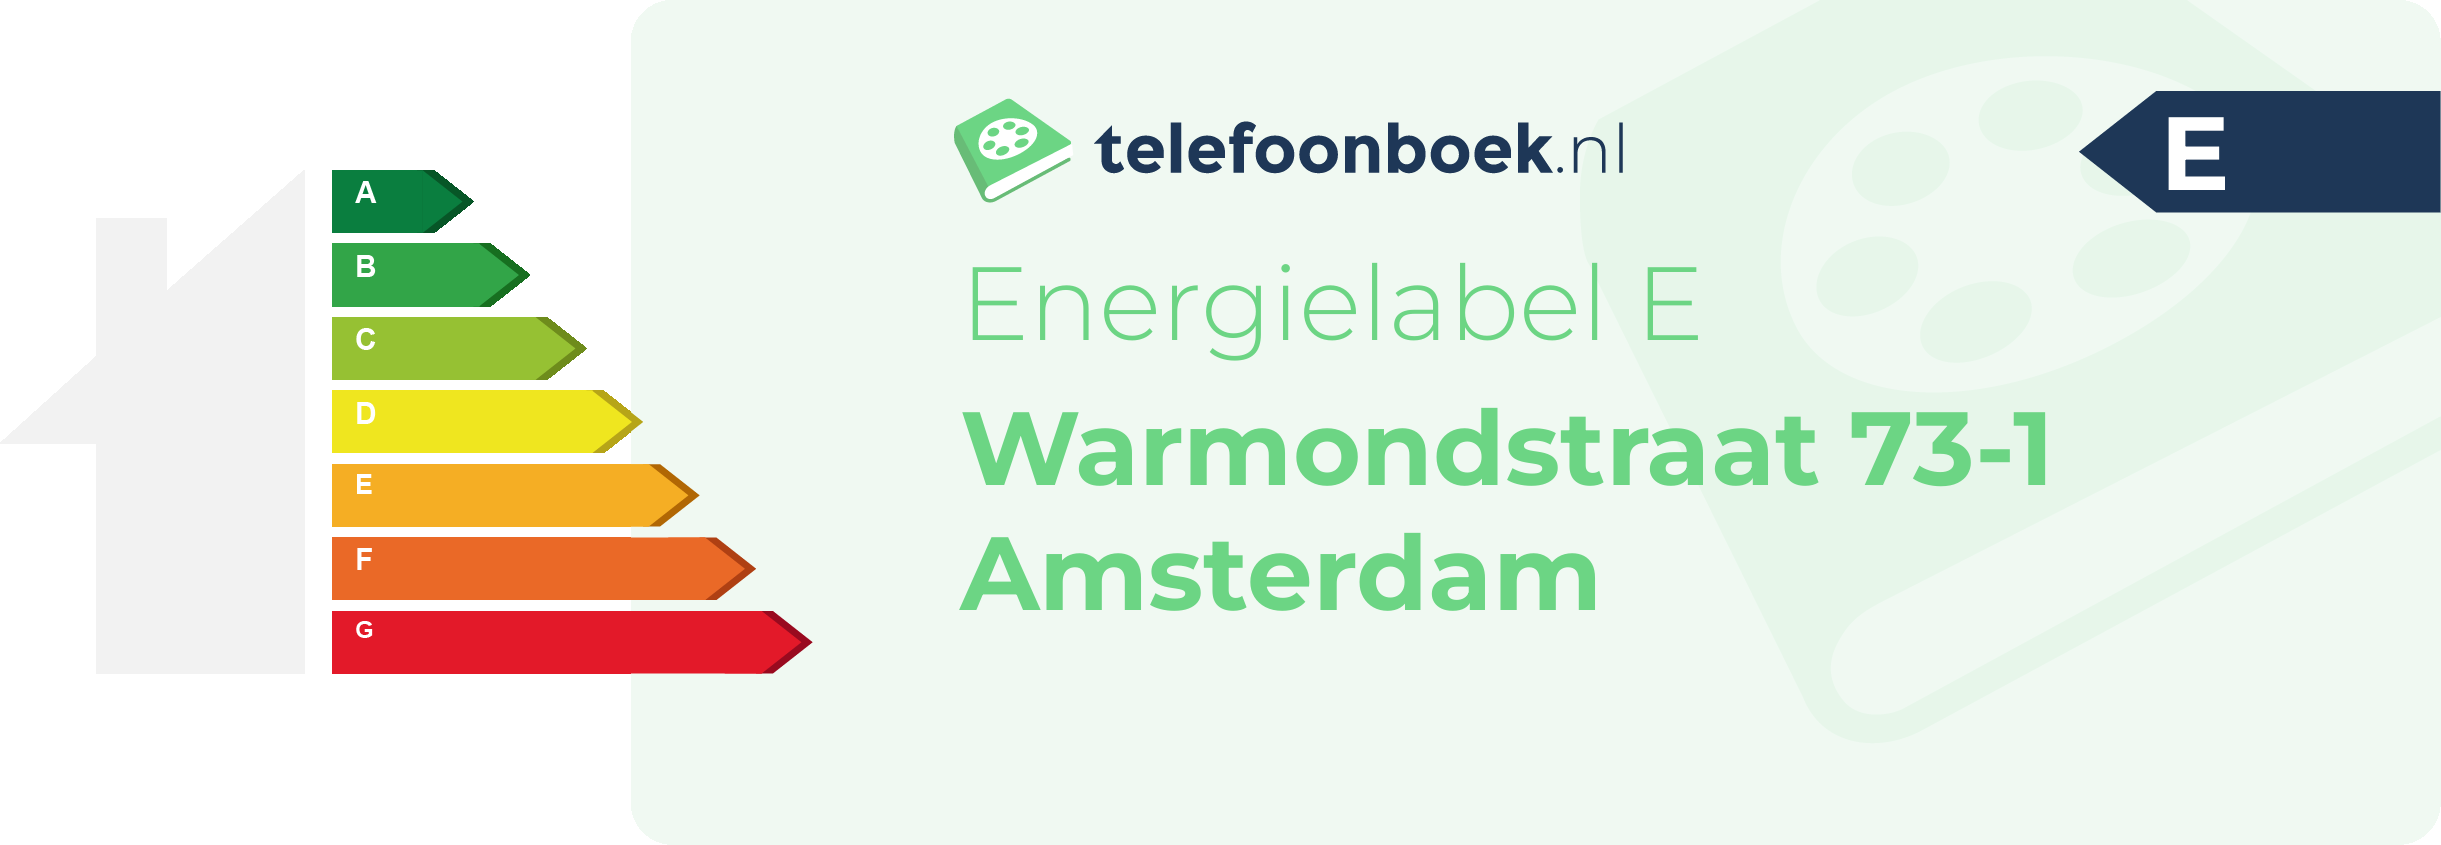 Energielabel Warmondstraat 73-1 Amsterdam